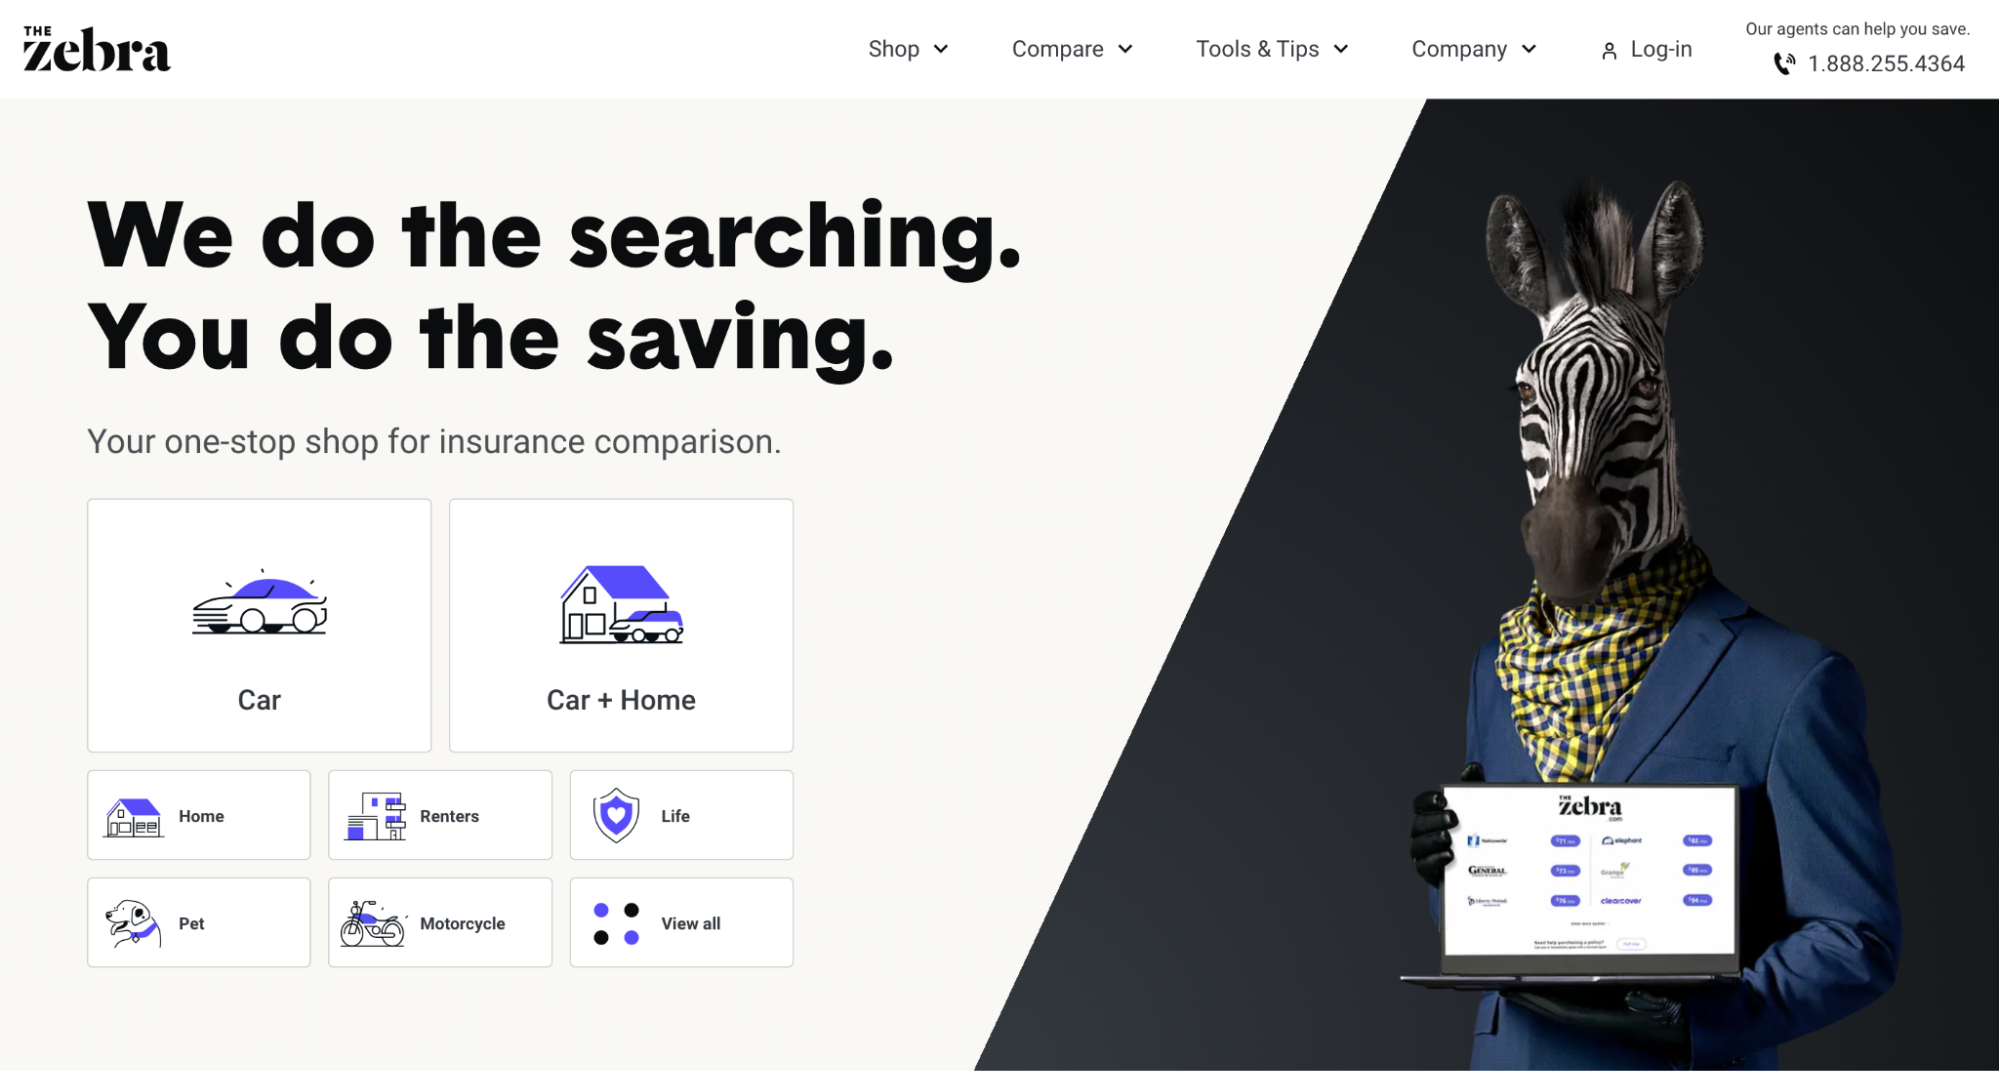 The Zebra home page